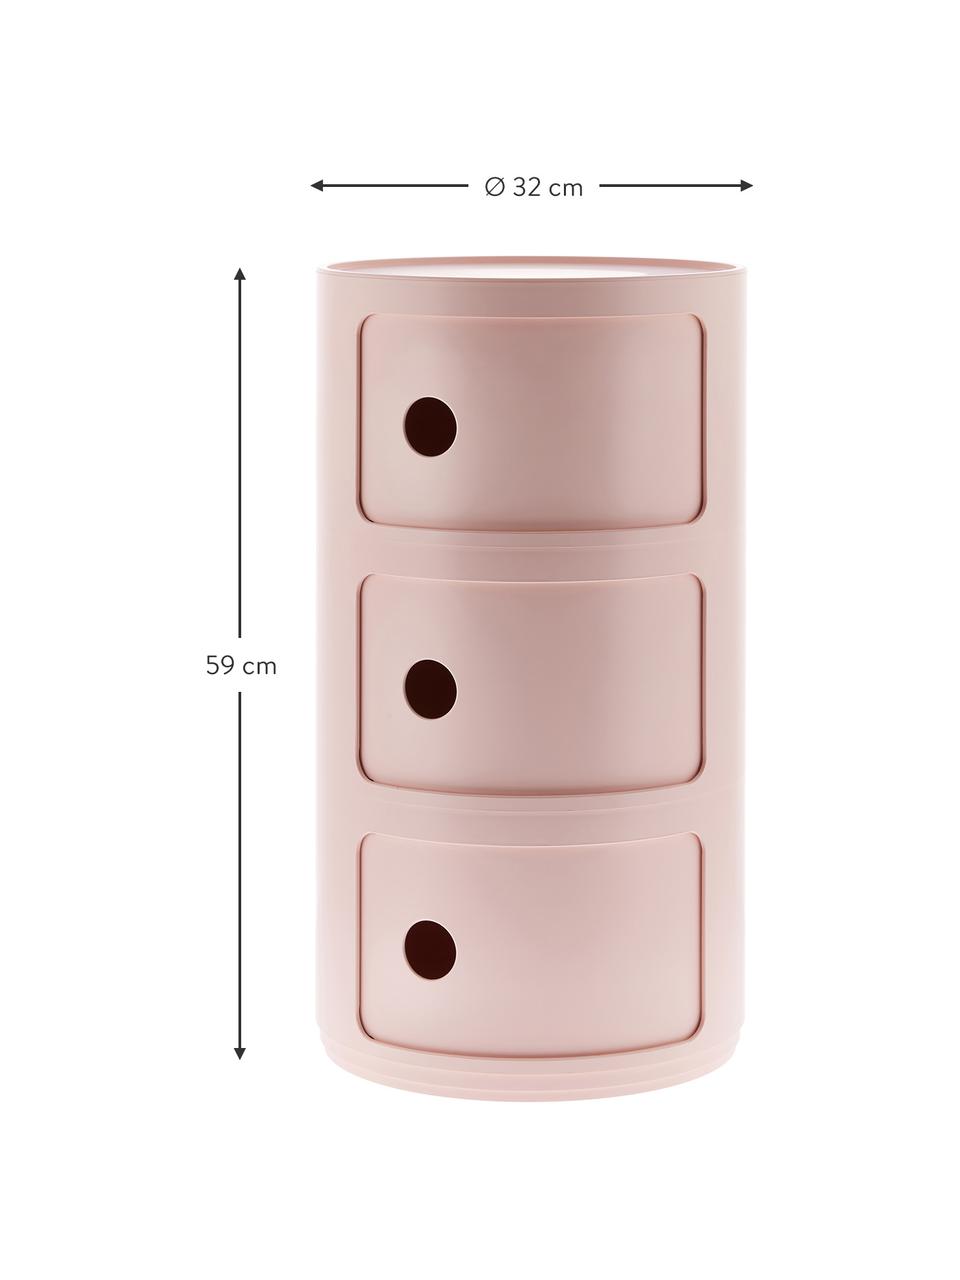 Design container Componibili Bio 3 Modules in roze, 100% biopolymeer van hernieuwbare grondstoffen, Mat roze, Ø 32 x H 59 cm